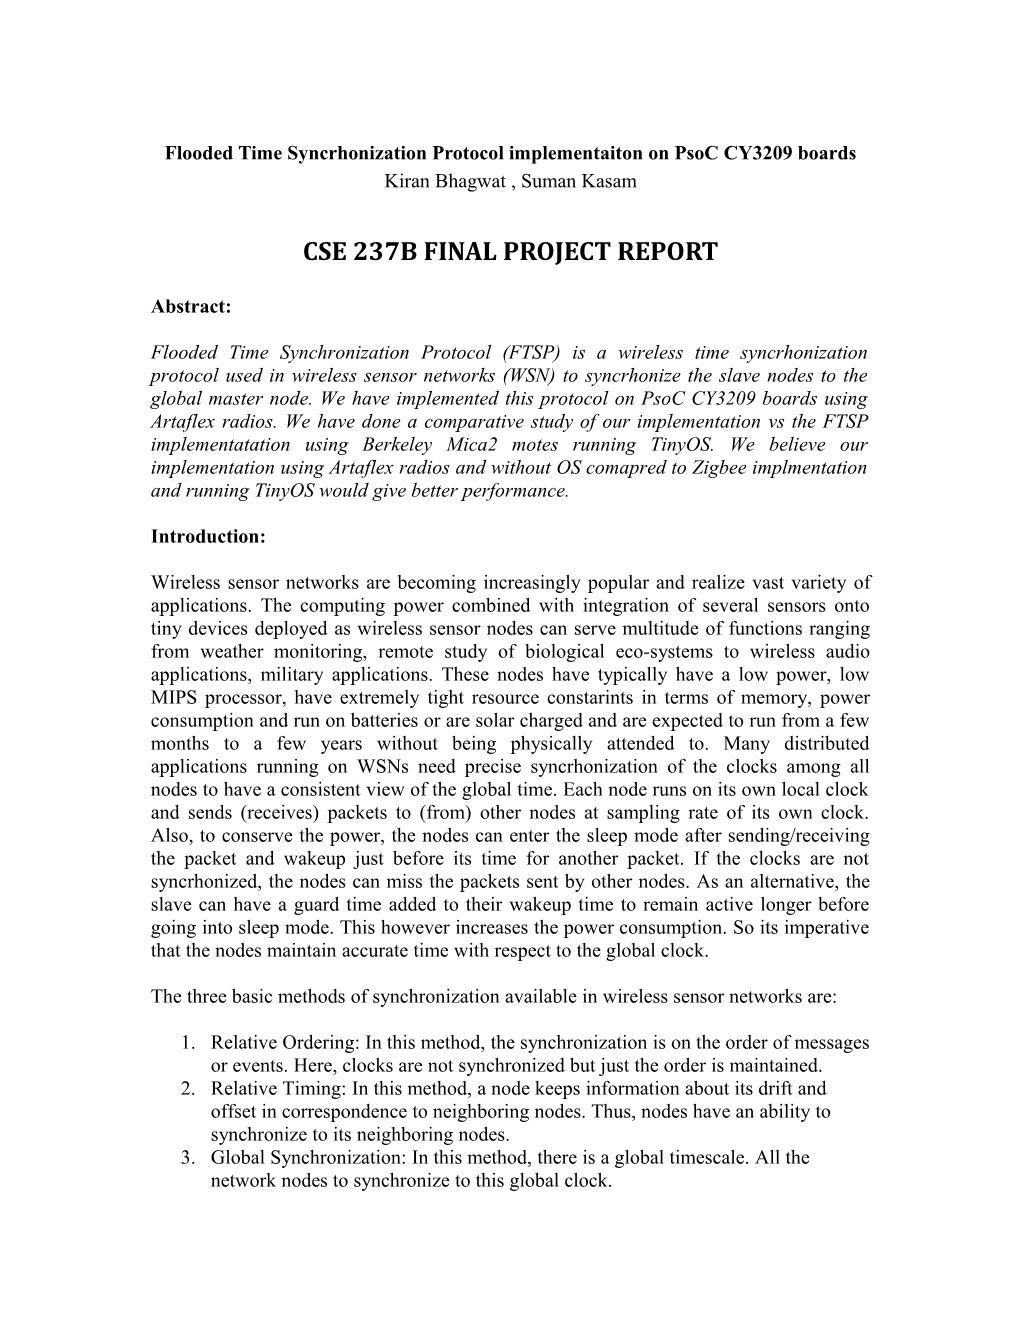 Cse 237B Project Report